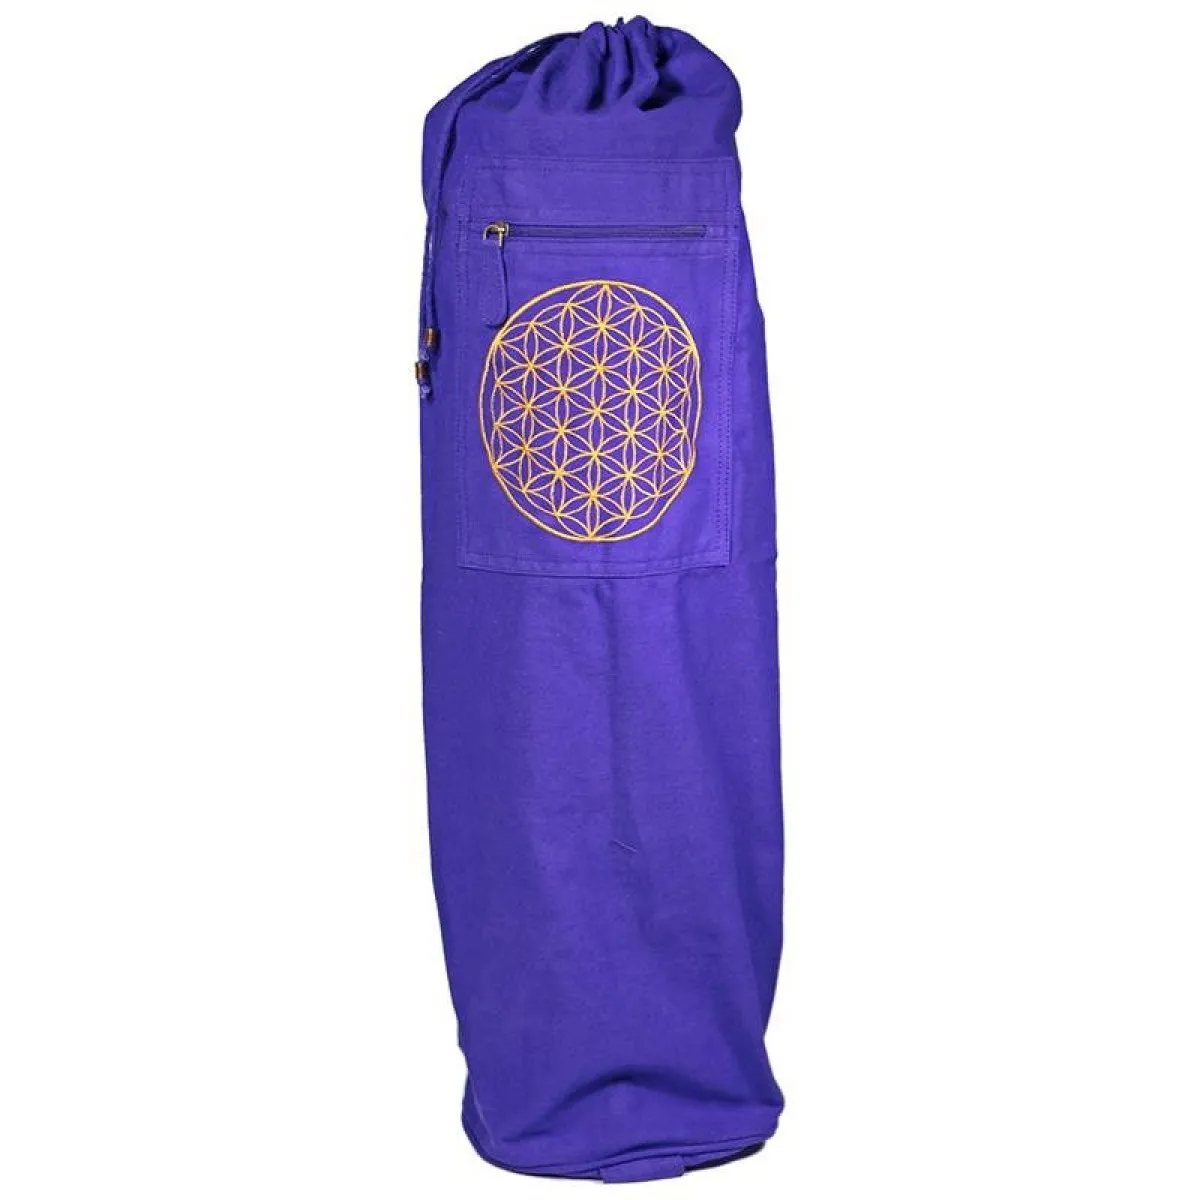 Bolsa para esterilla de yoga púrpura con flor de la vida en dorado 74x19 cm